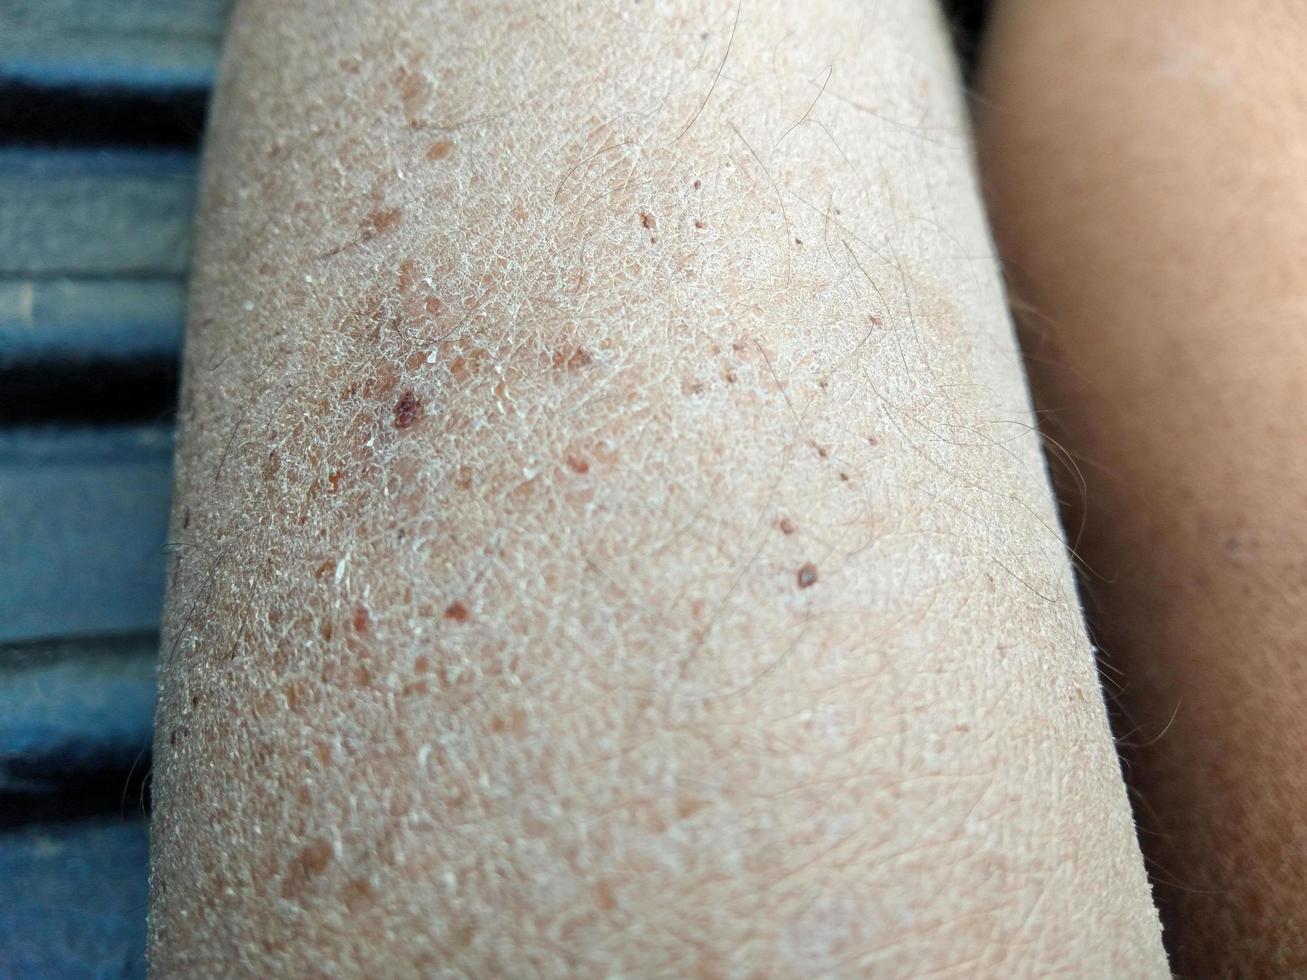 dry cracked skin concept  Dermatitis, eczema, ringworm  cream lotion cosmetic photo